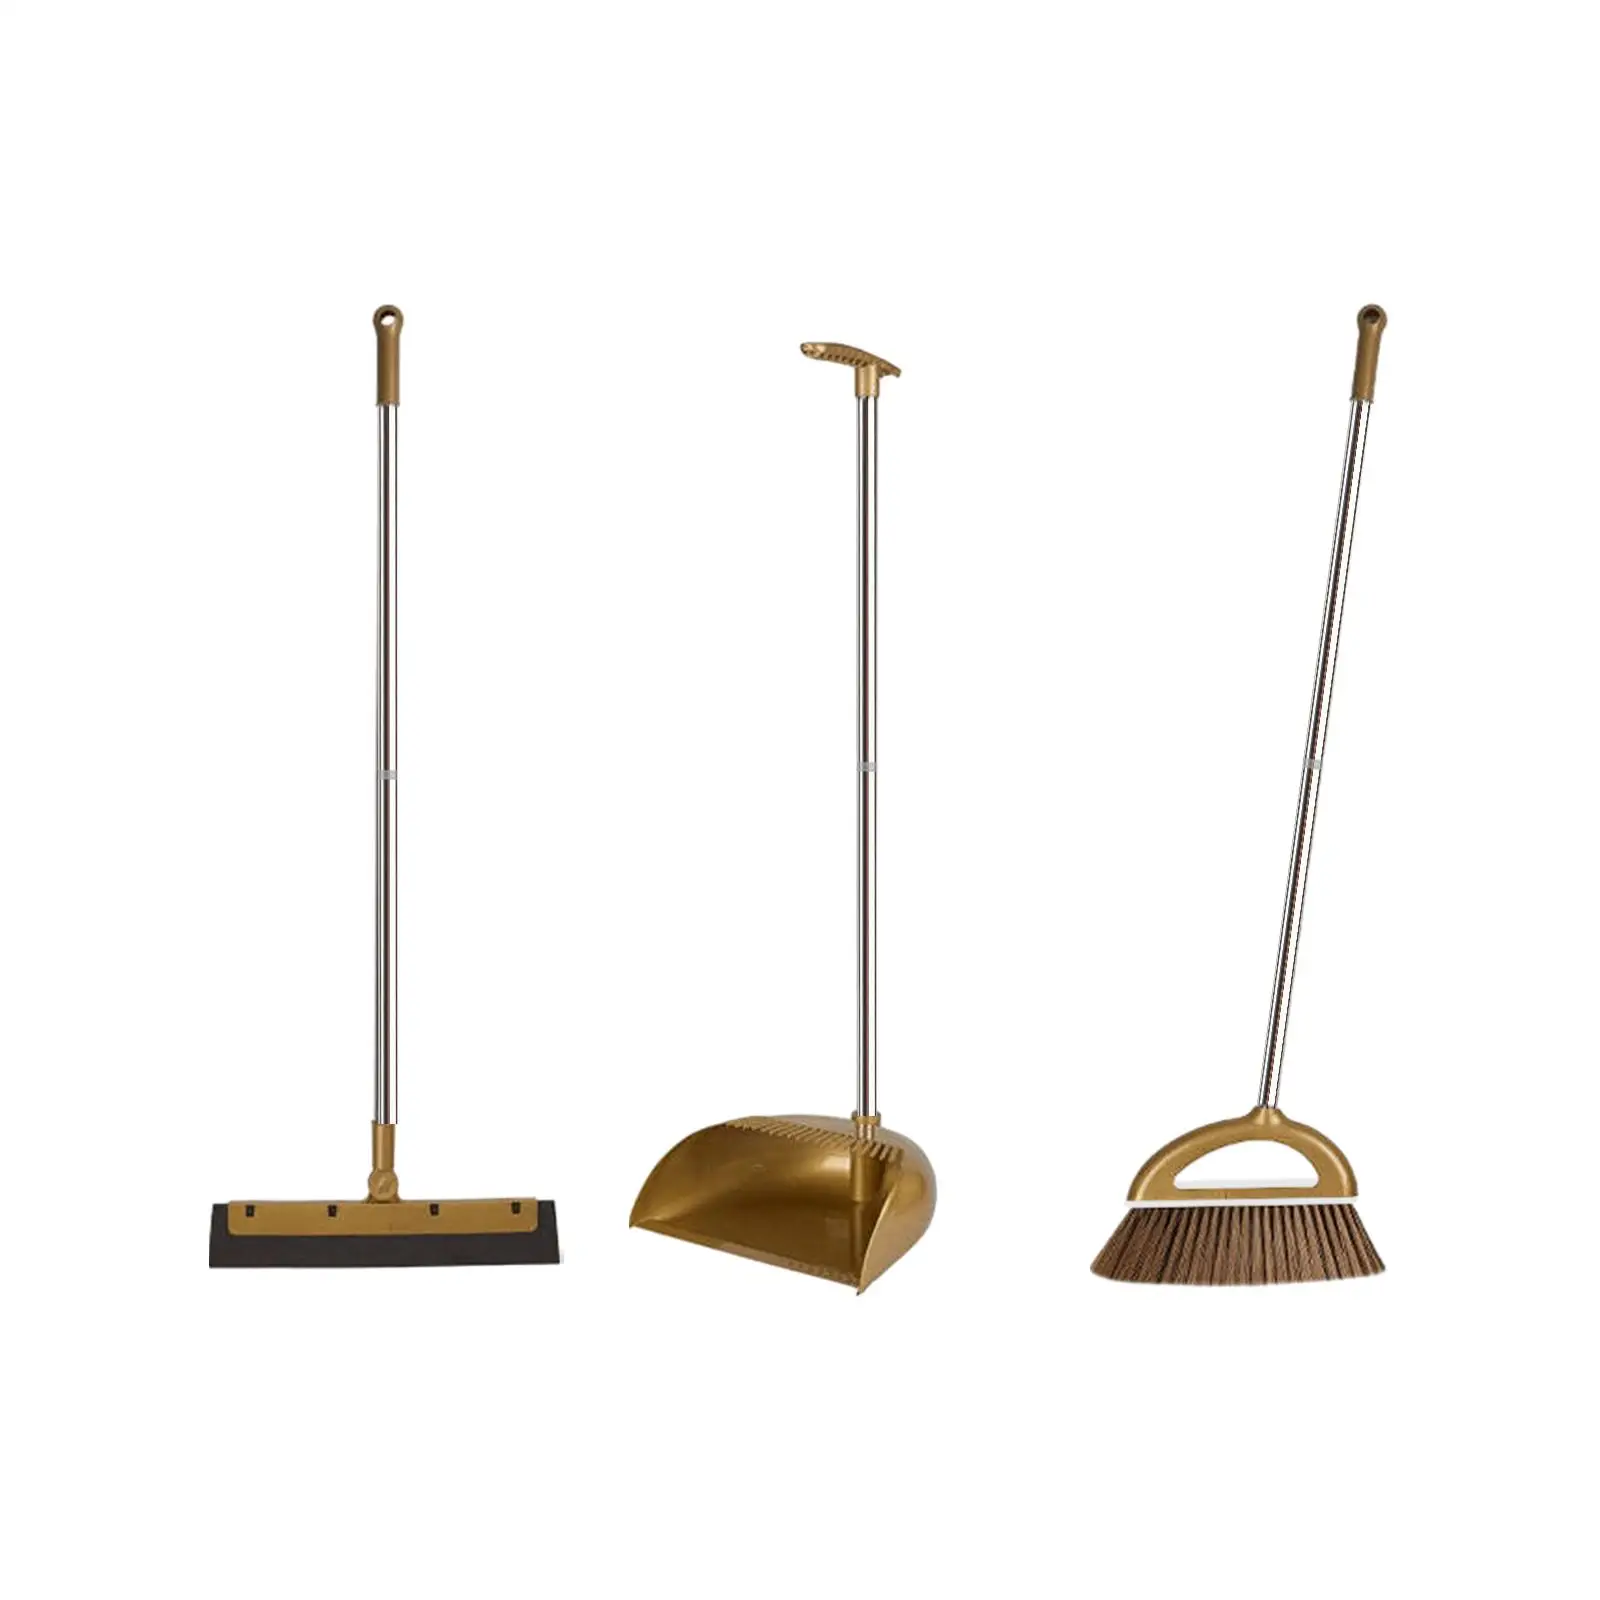 3x Dustpan Broom Set Combo Set Floor Wiper Multifunction Household Cleaning Long